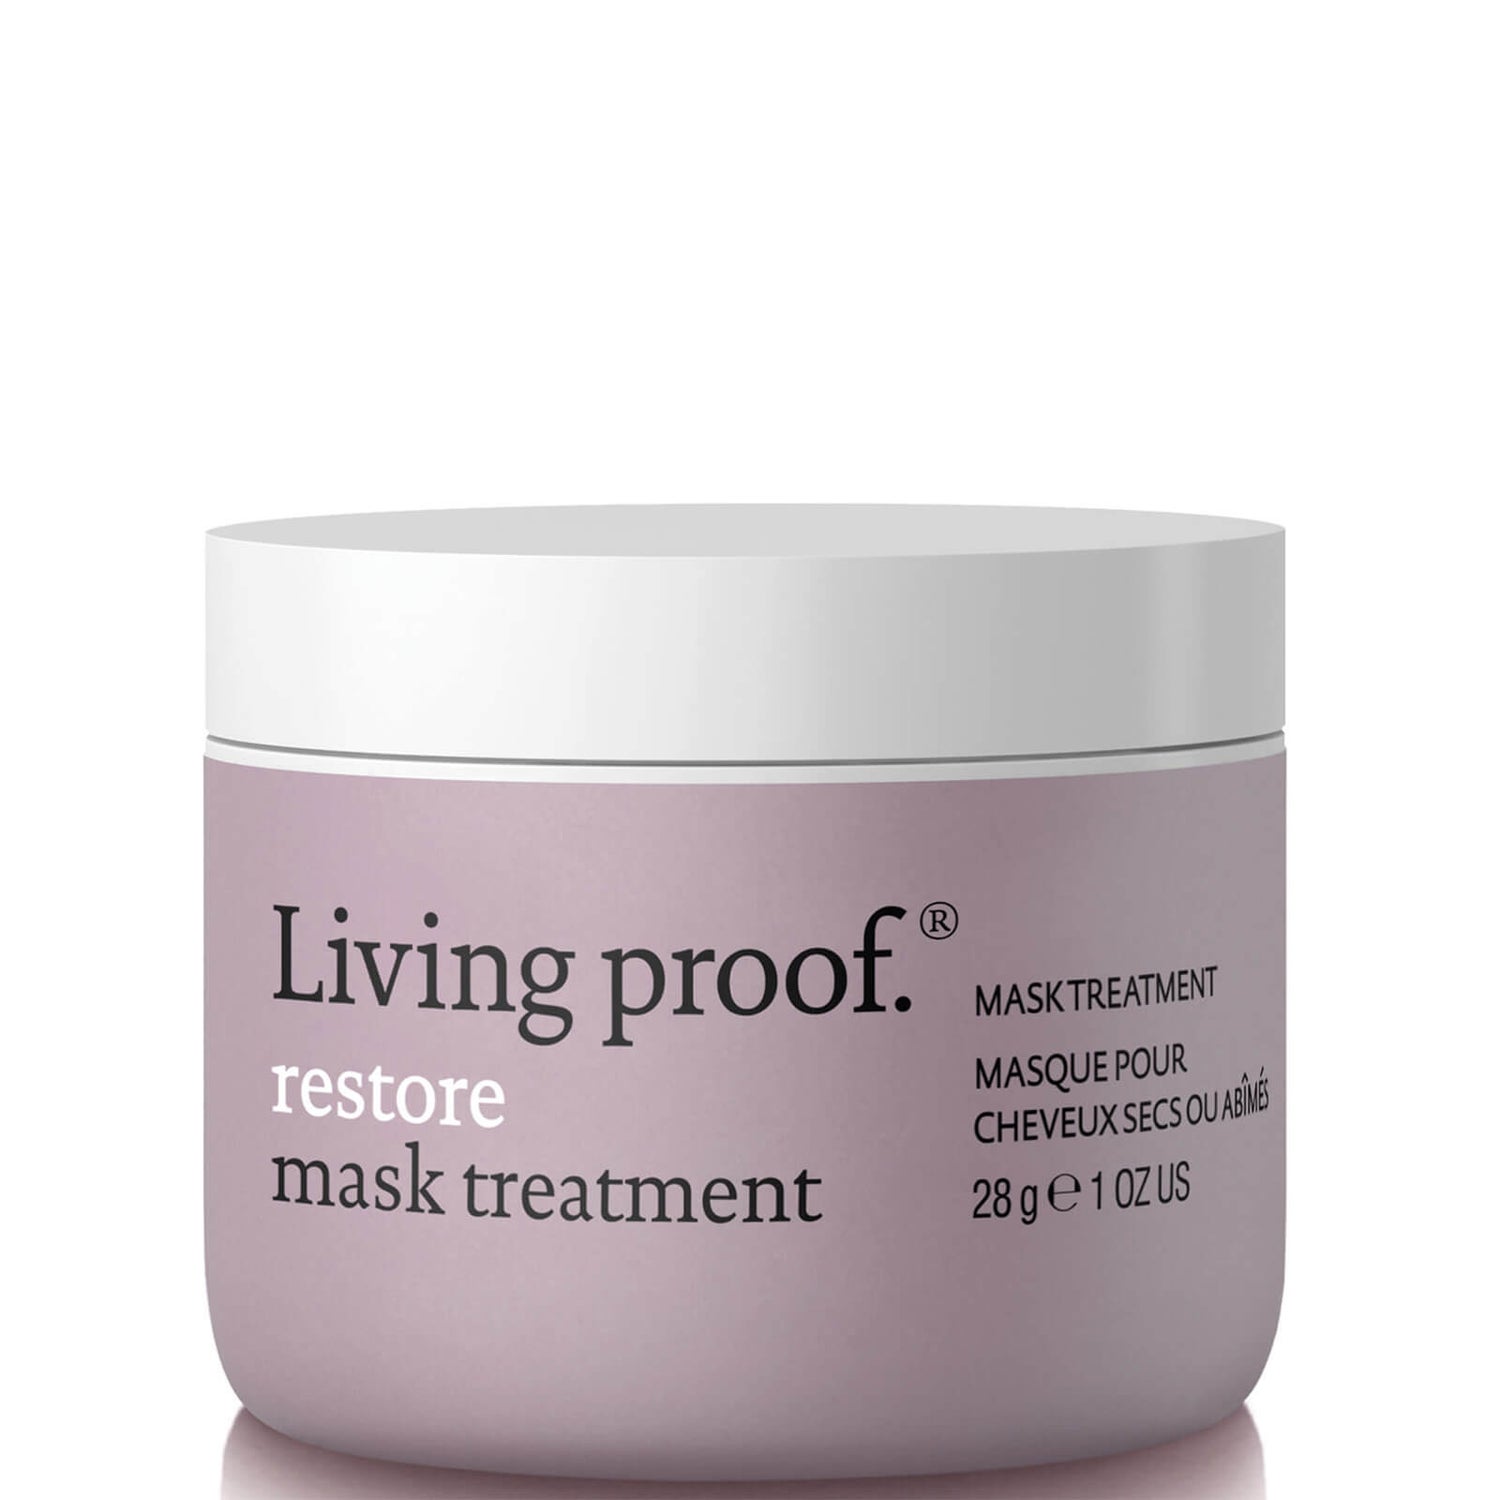 Máscara de Tratamento Restore da Living Proof 28 g